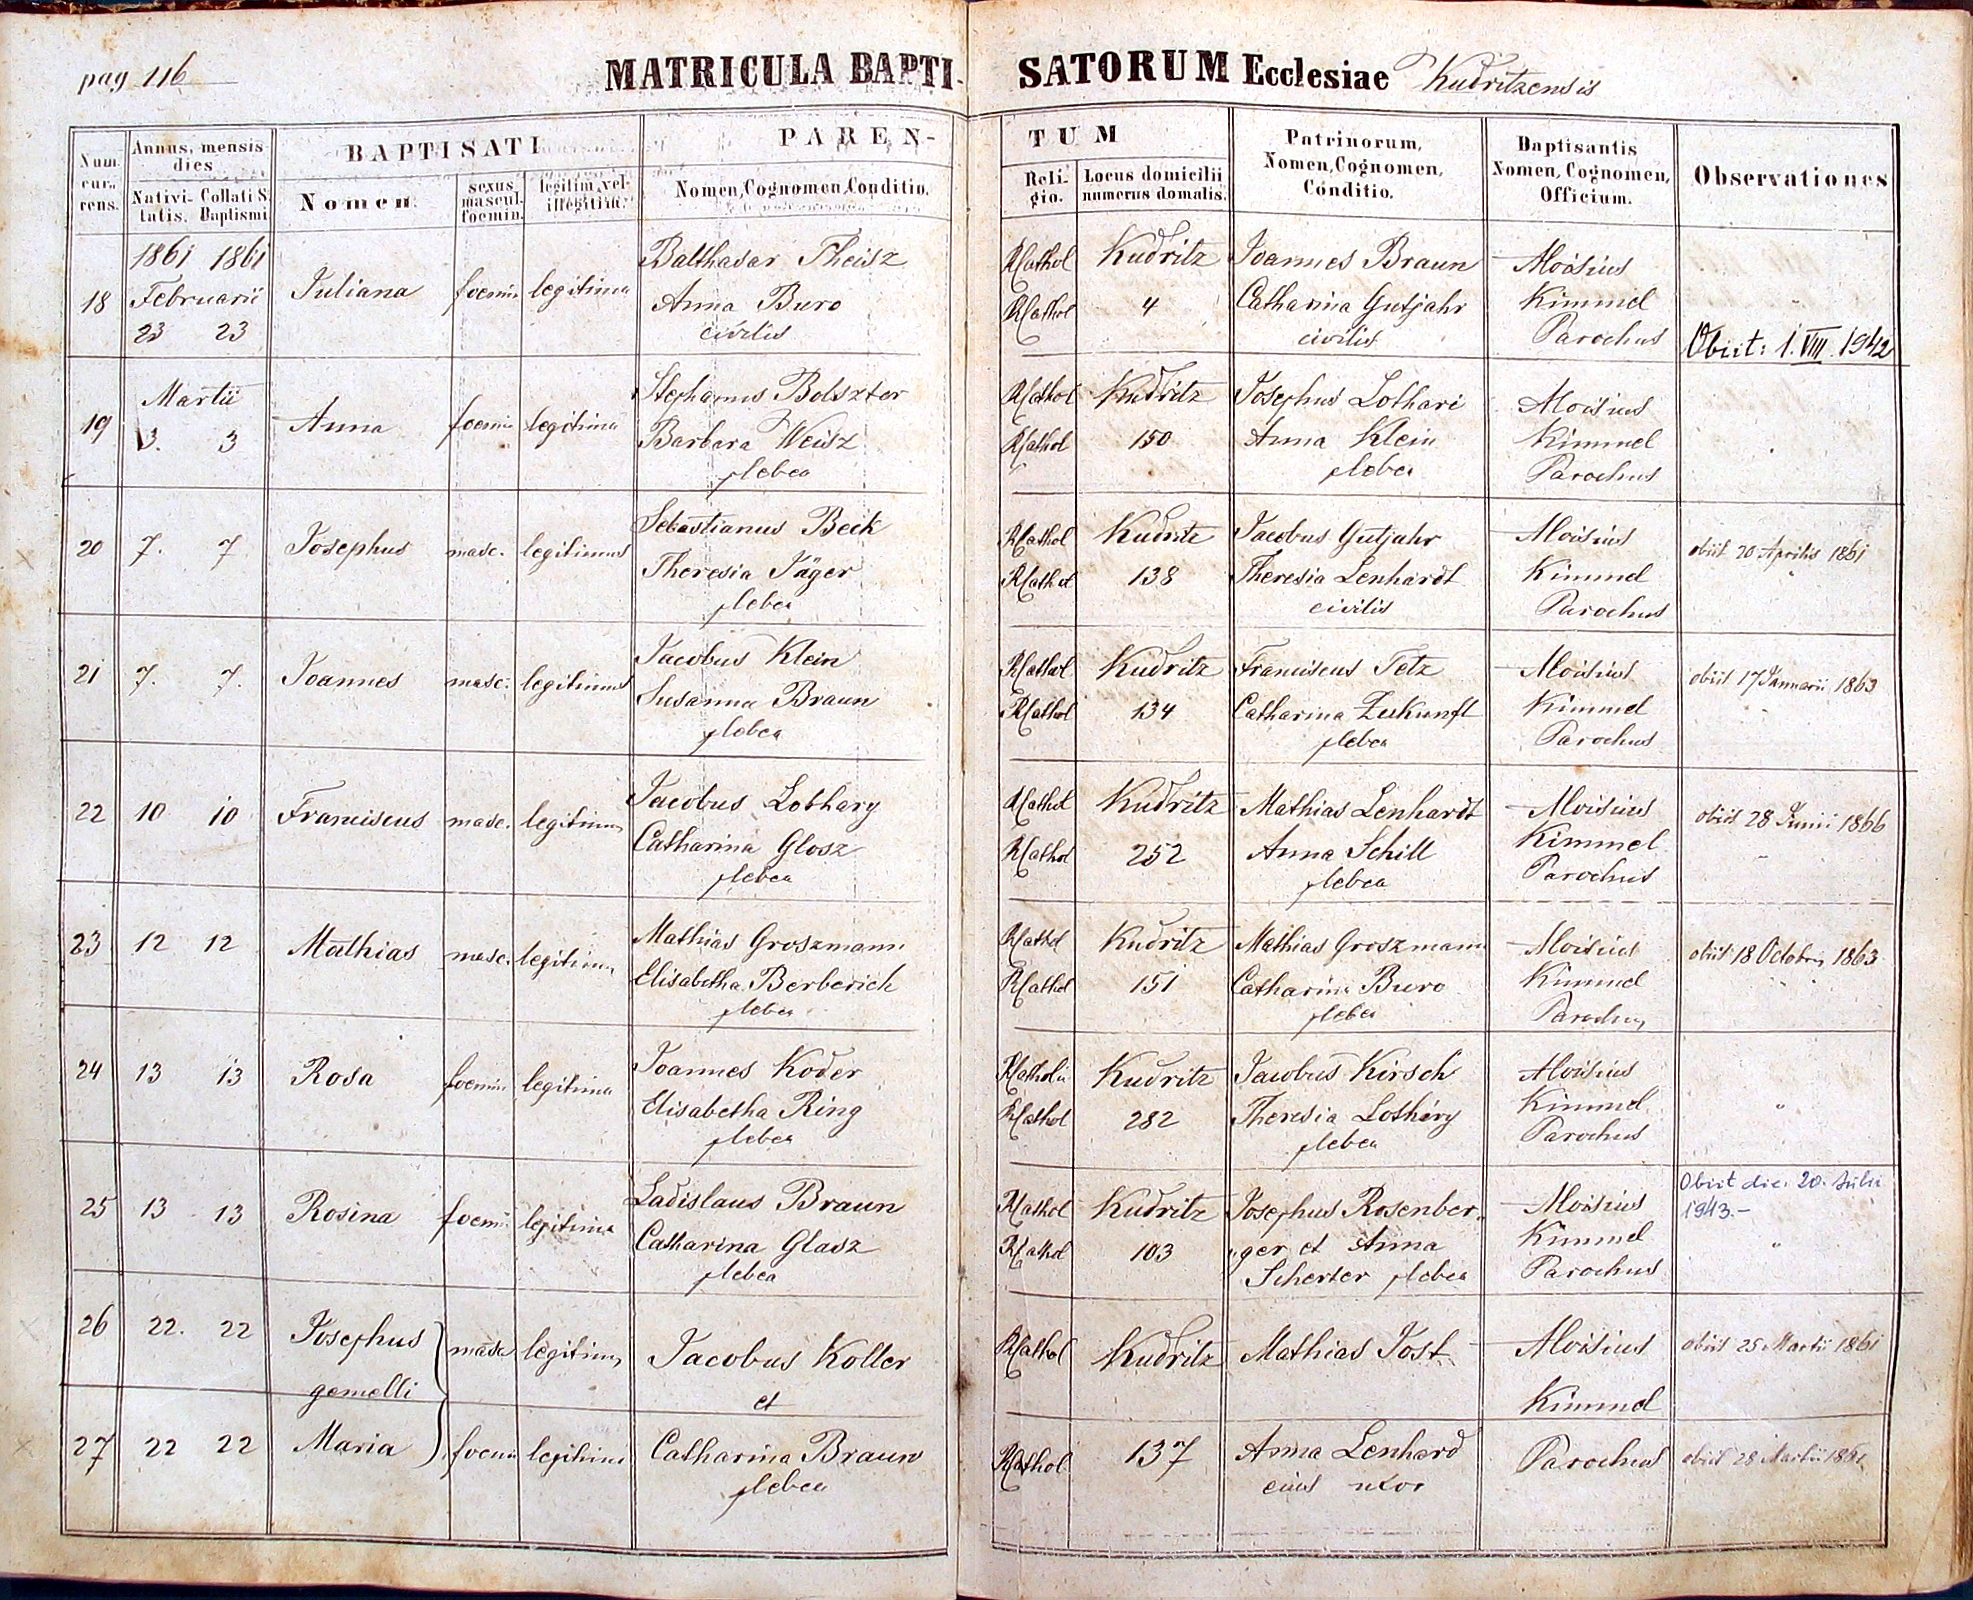 images/church_records/BIRTHS/1852-1870B/116